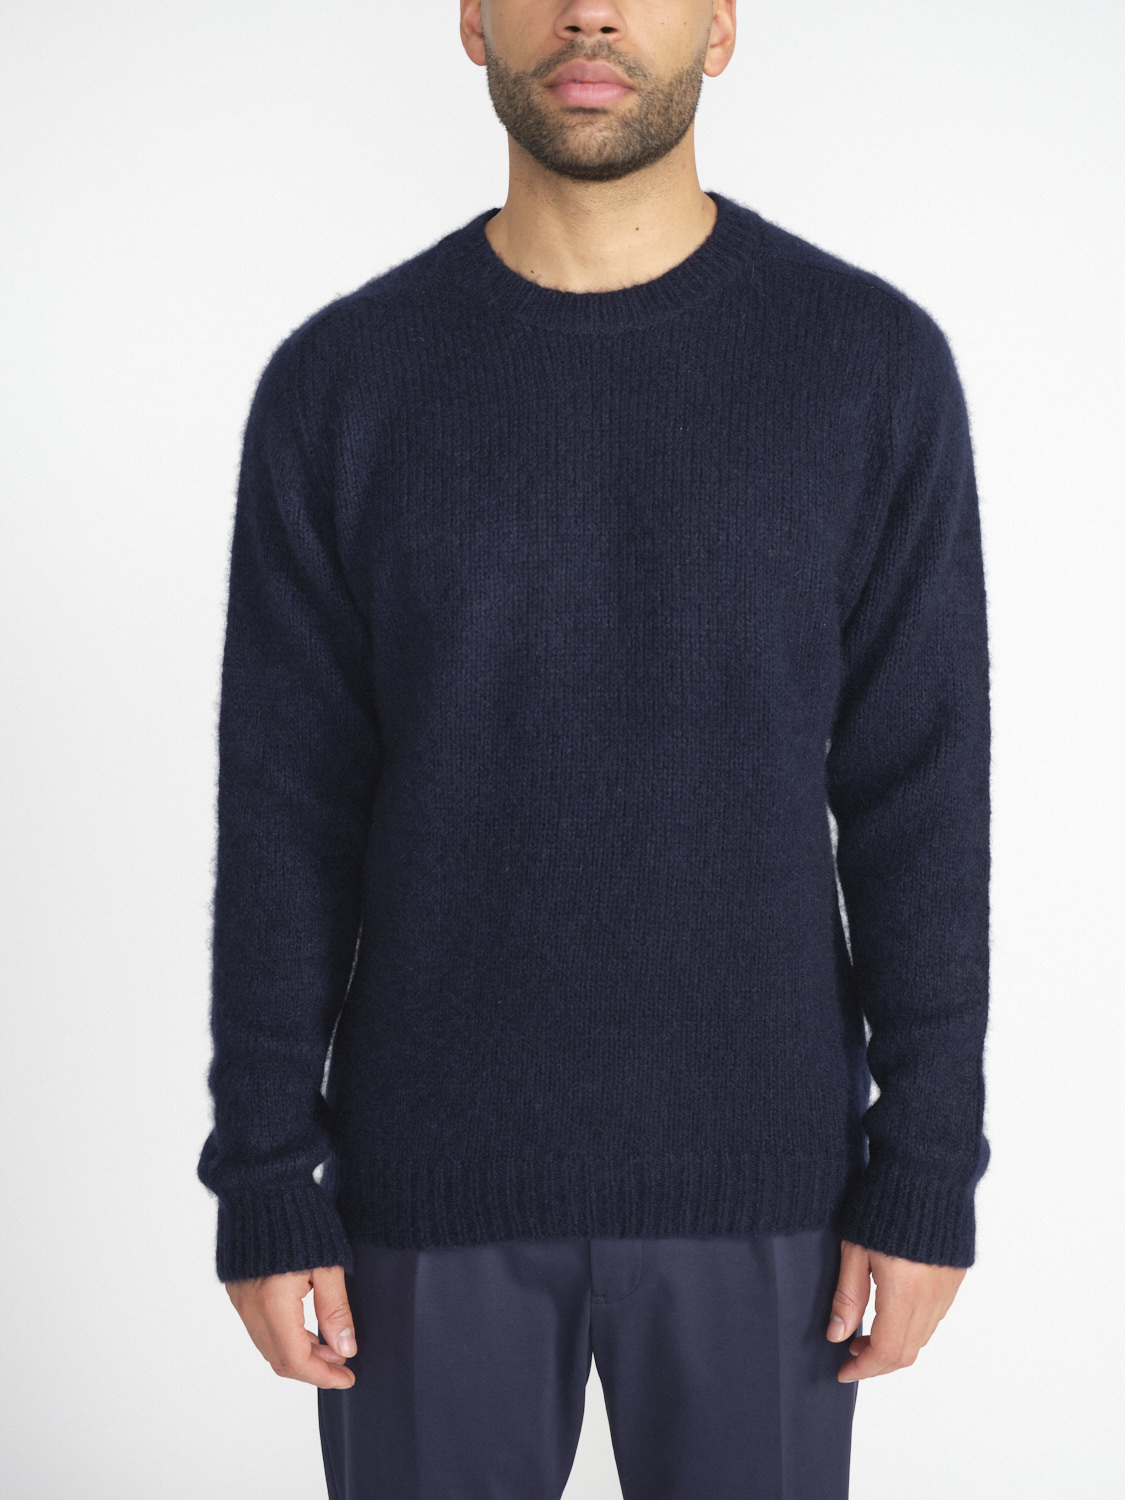 Stephan Boya Boya Leo – Soft cashmere sweater  marine L